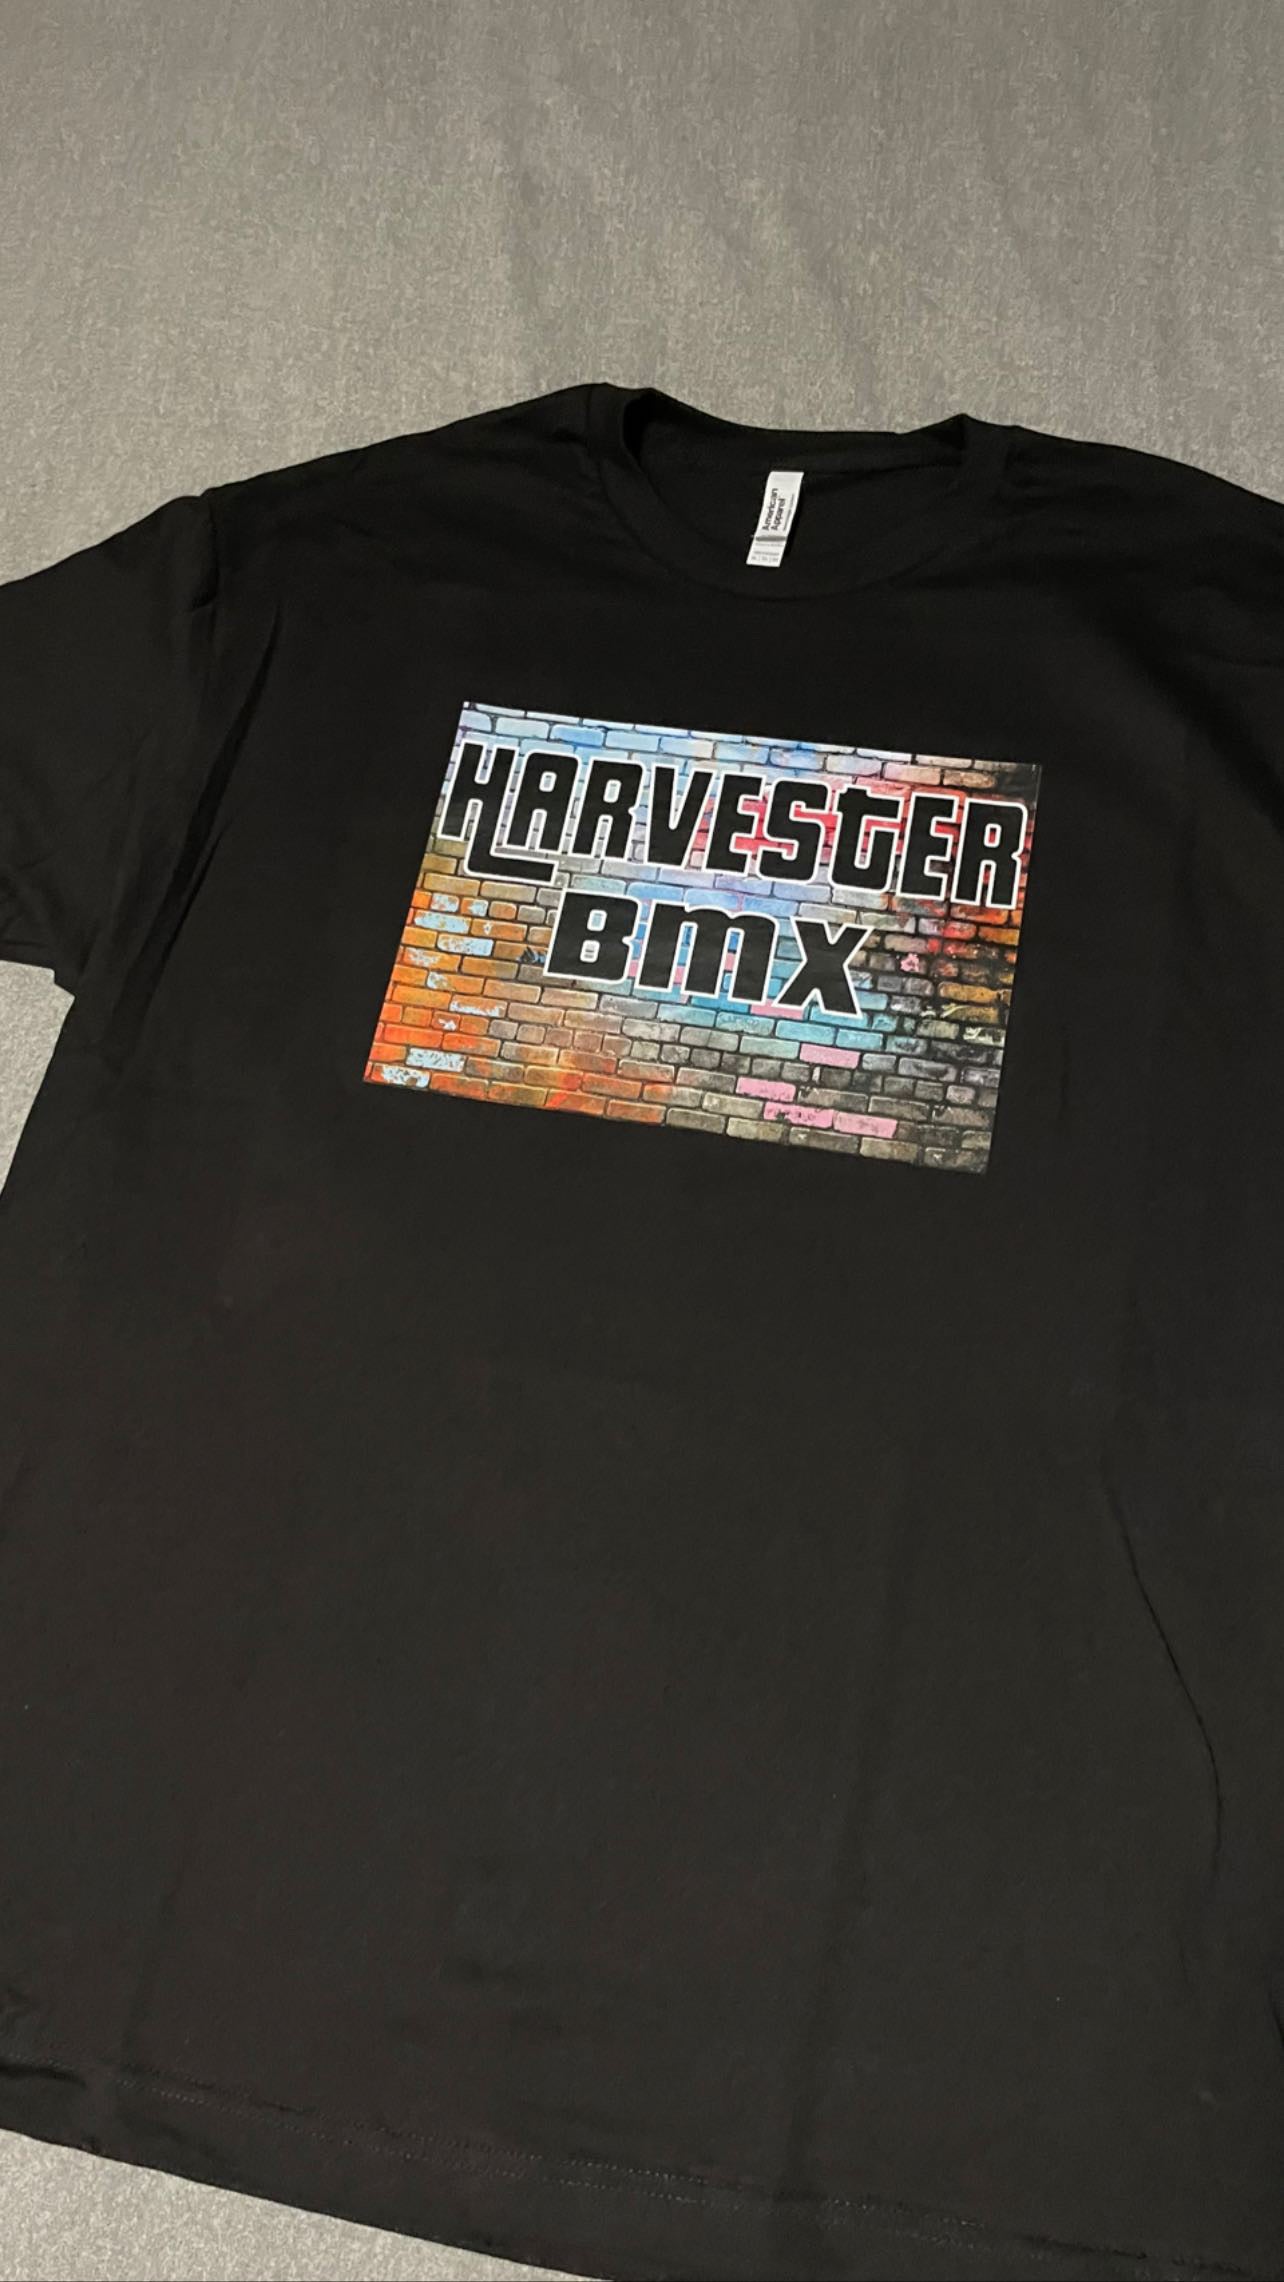 Harvester Grand Theft Tshirt